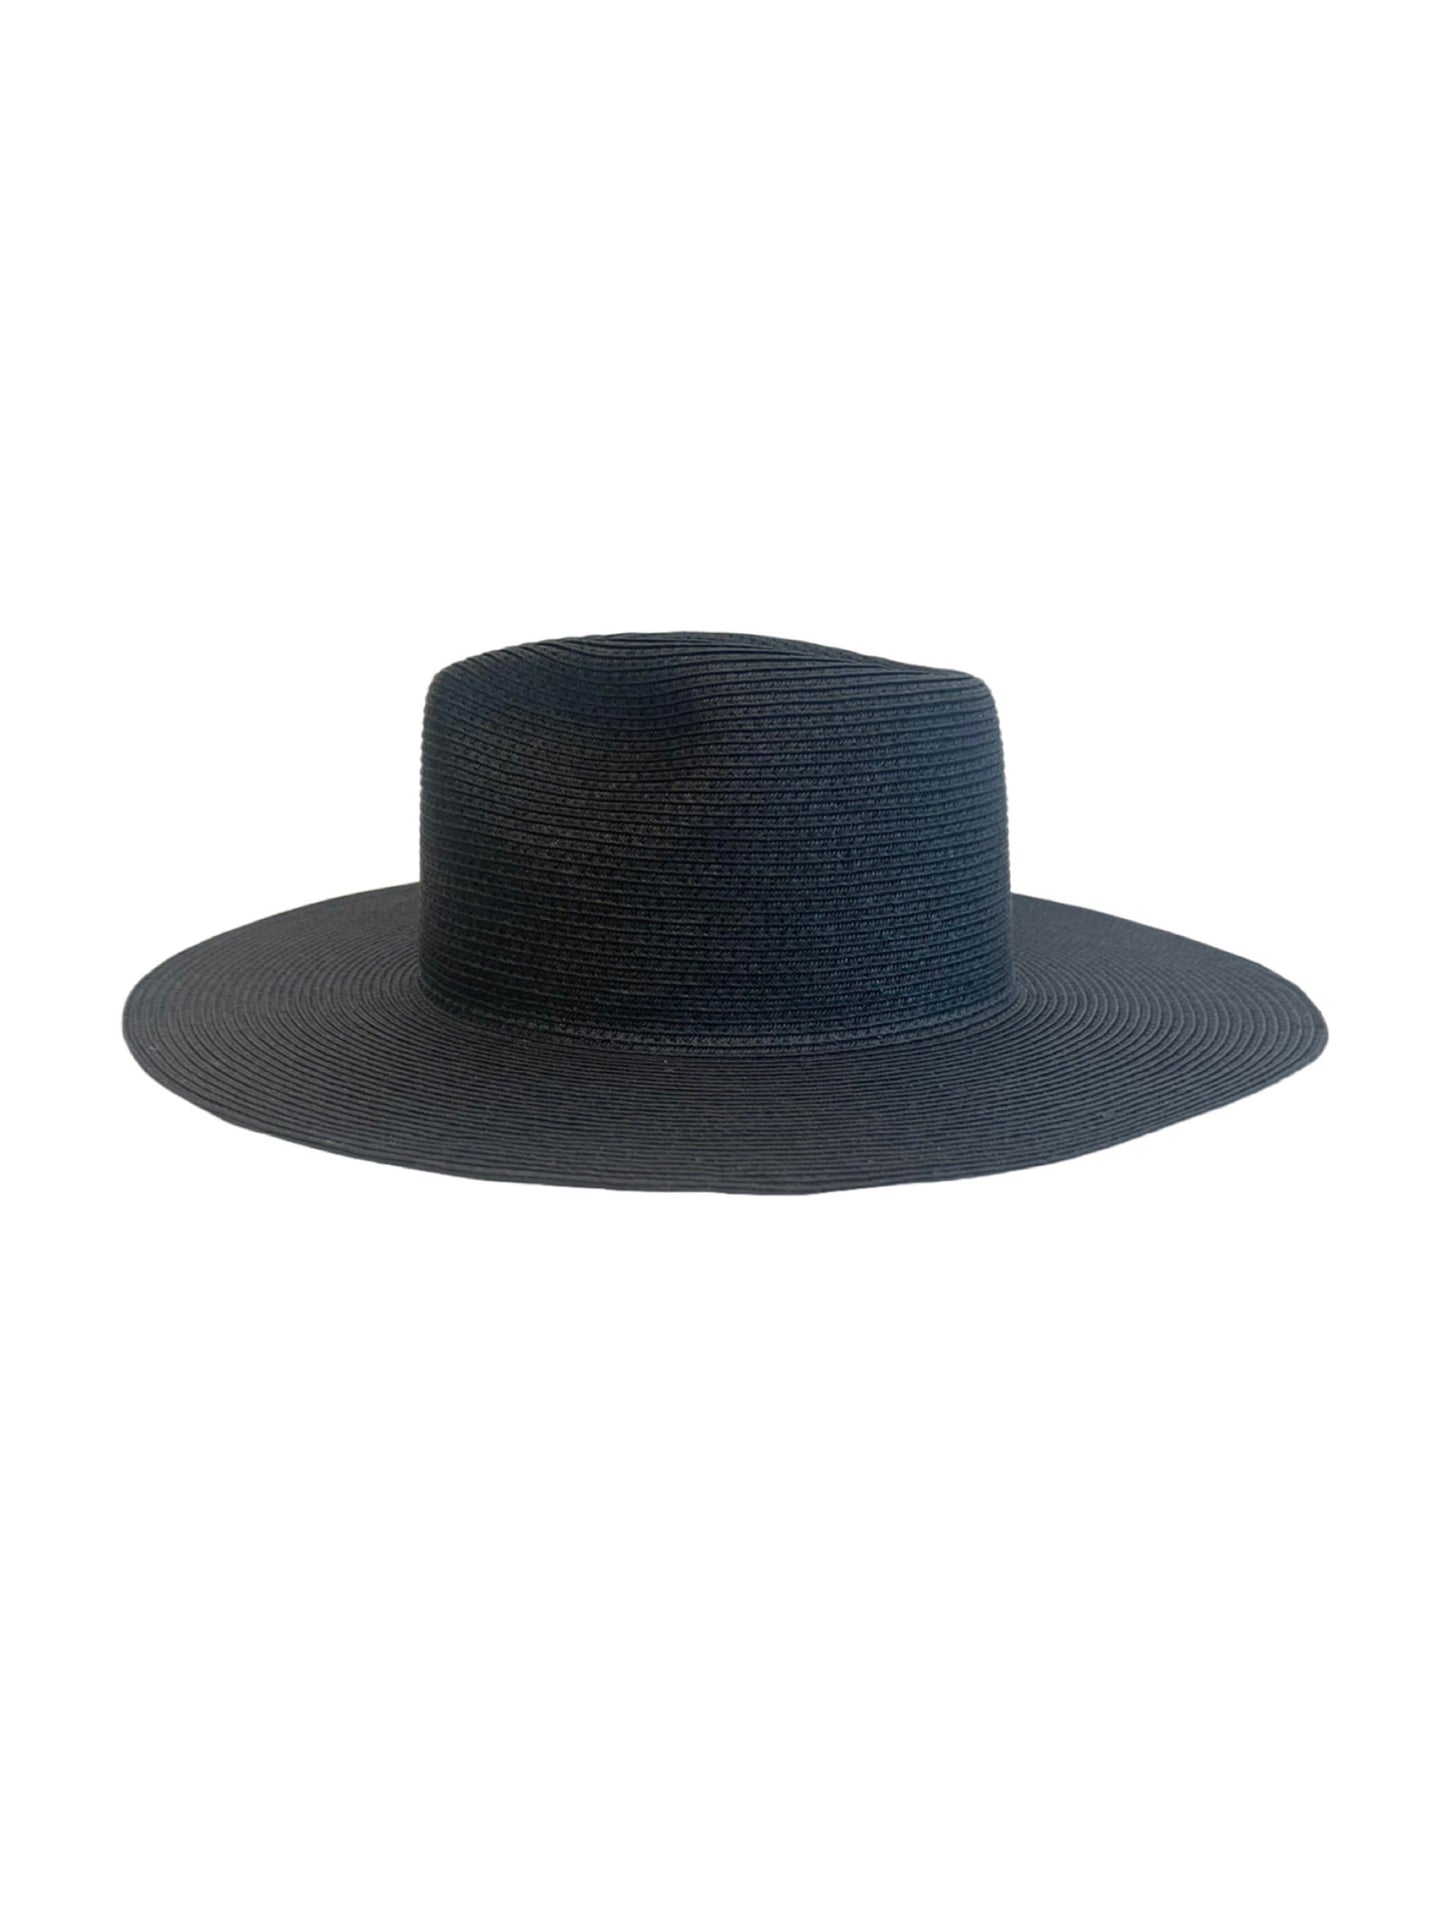 the native hat black side